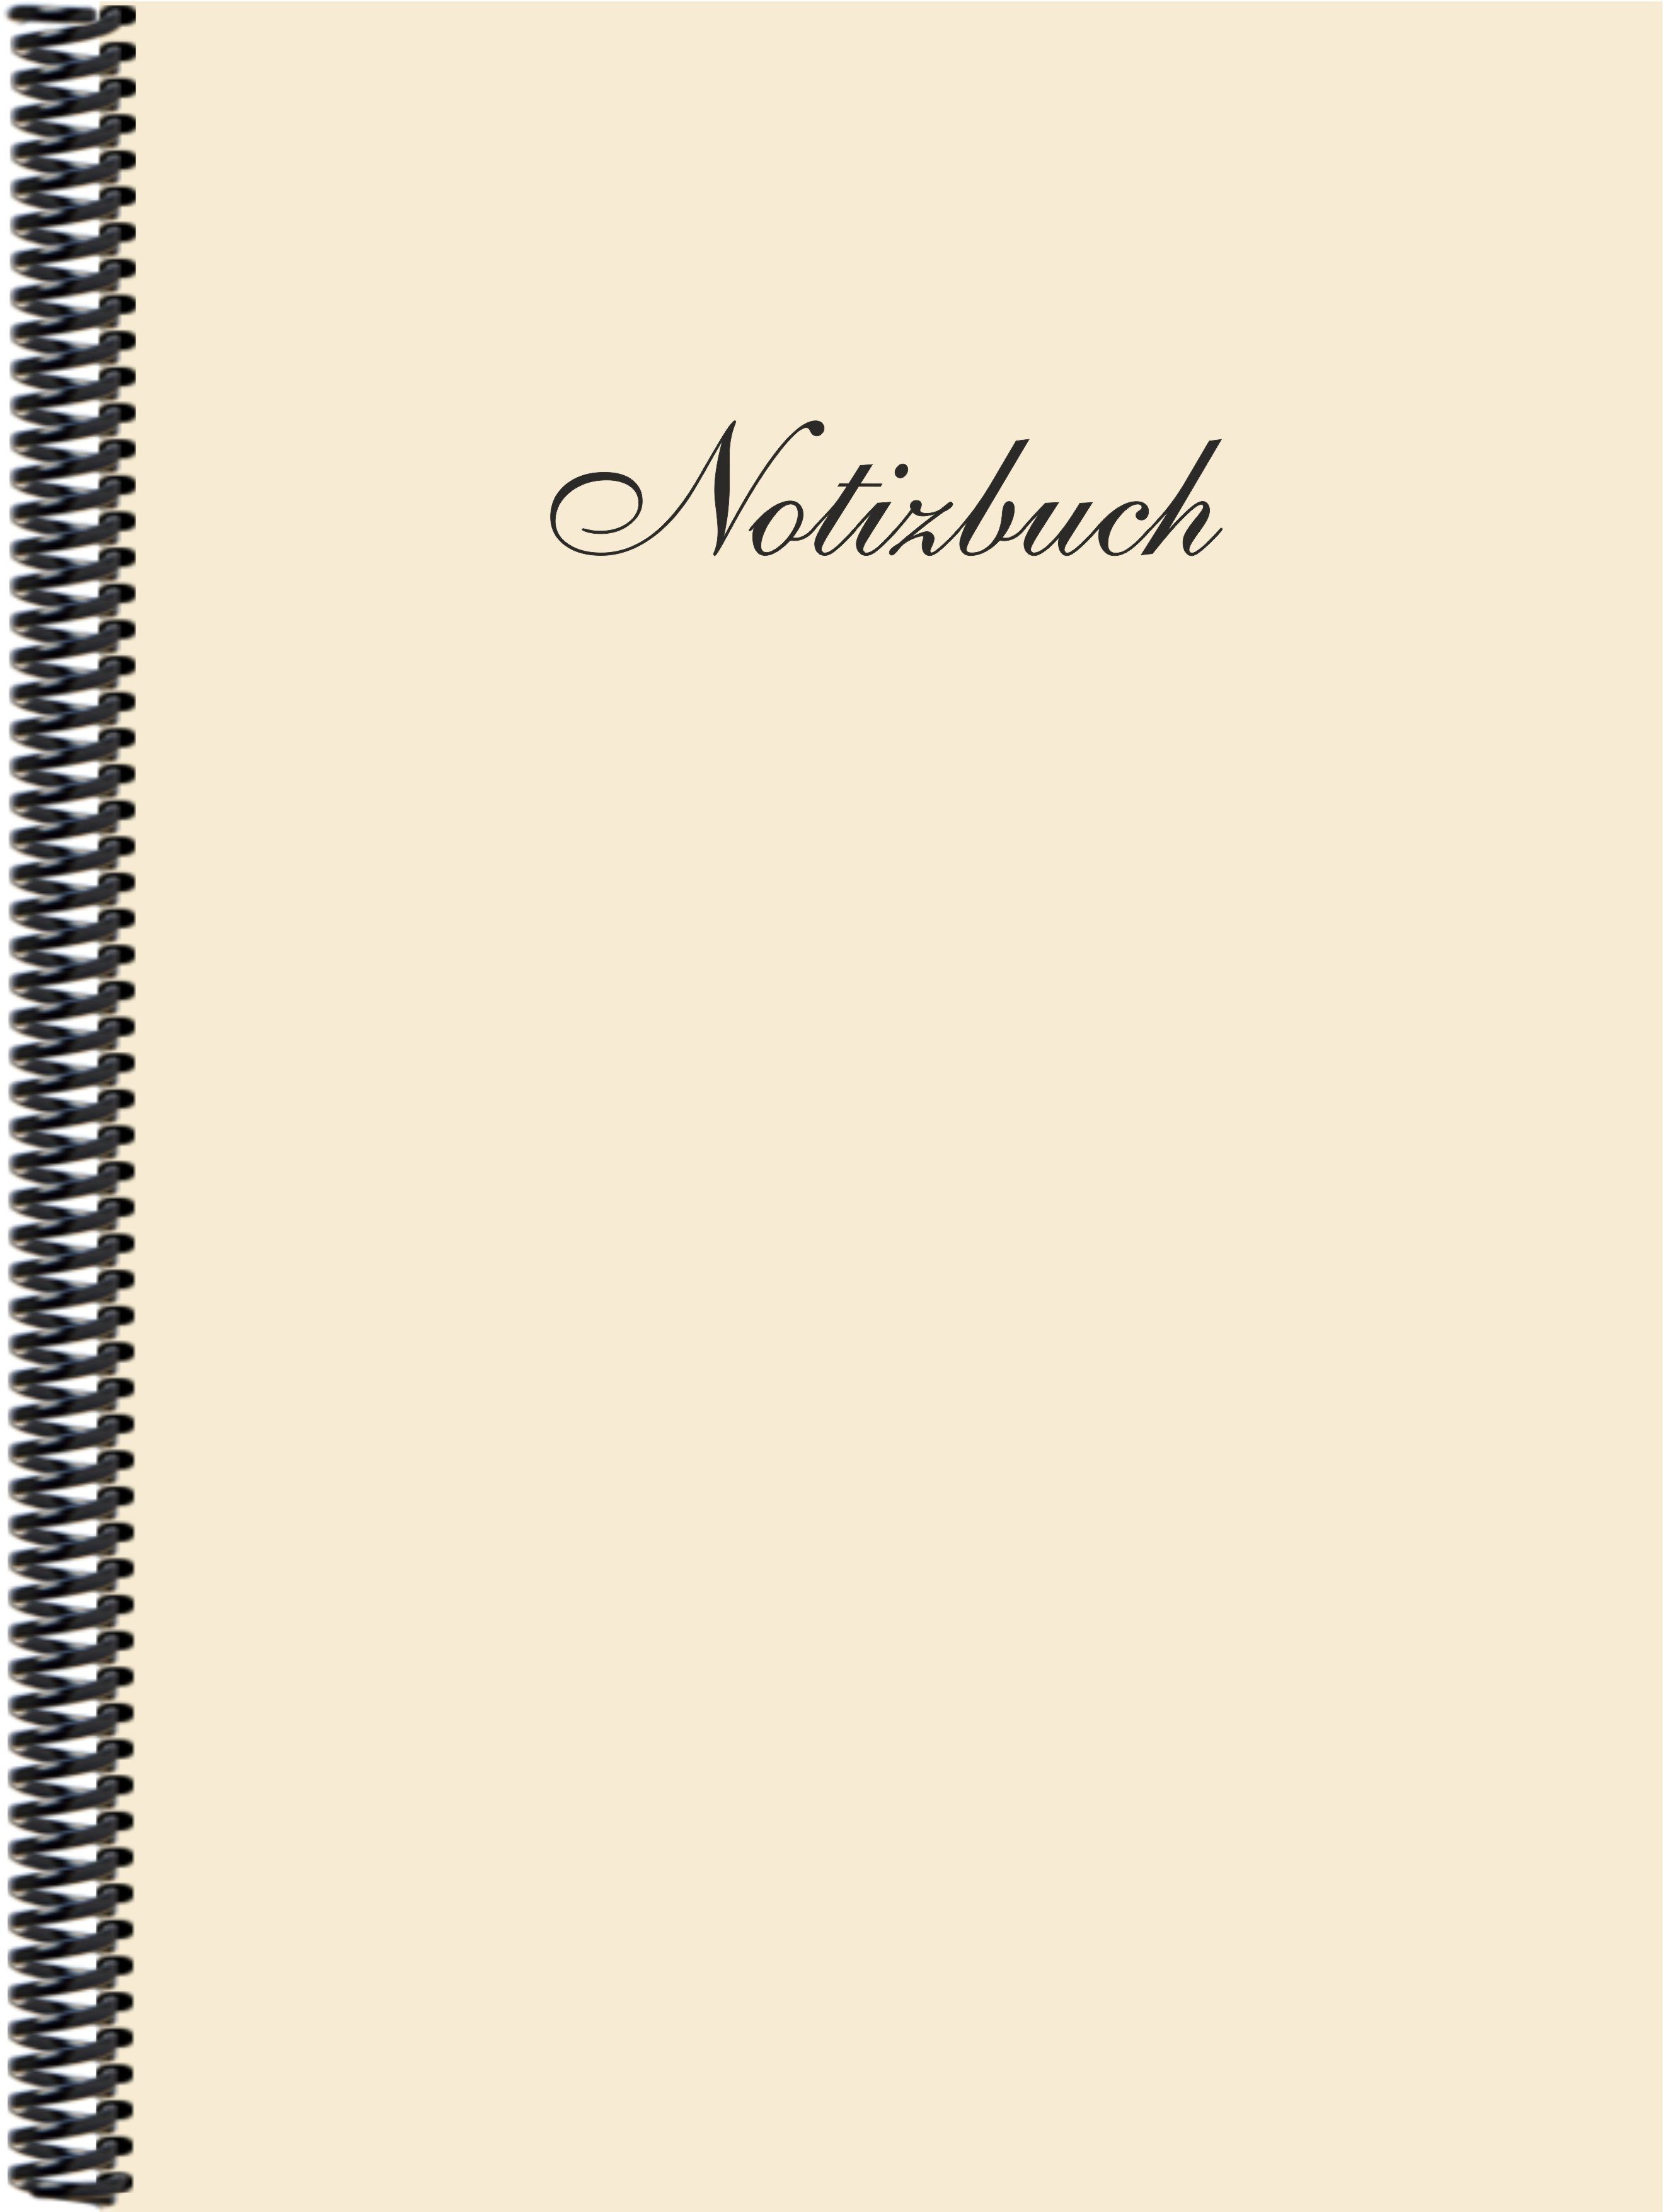 DINA4 blanko, Verlag in Trendfarbe E&Z Gmbh Notizbuch beige der Notizbuch